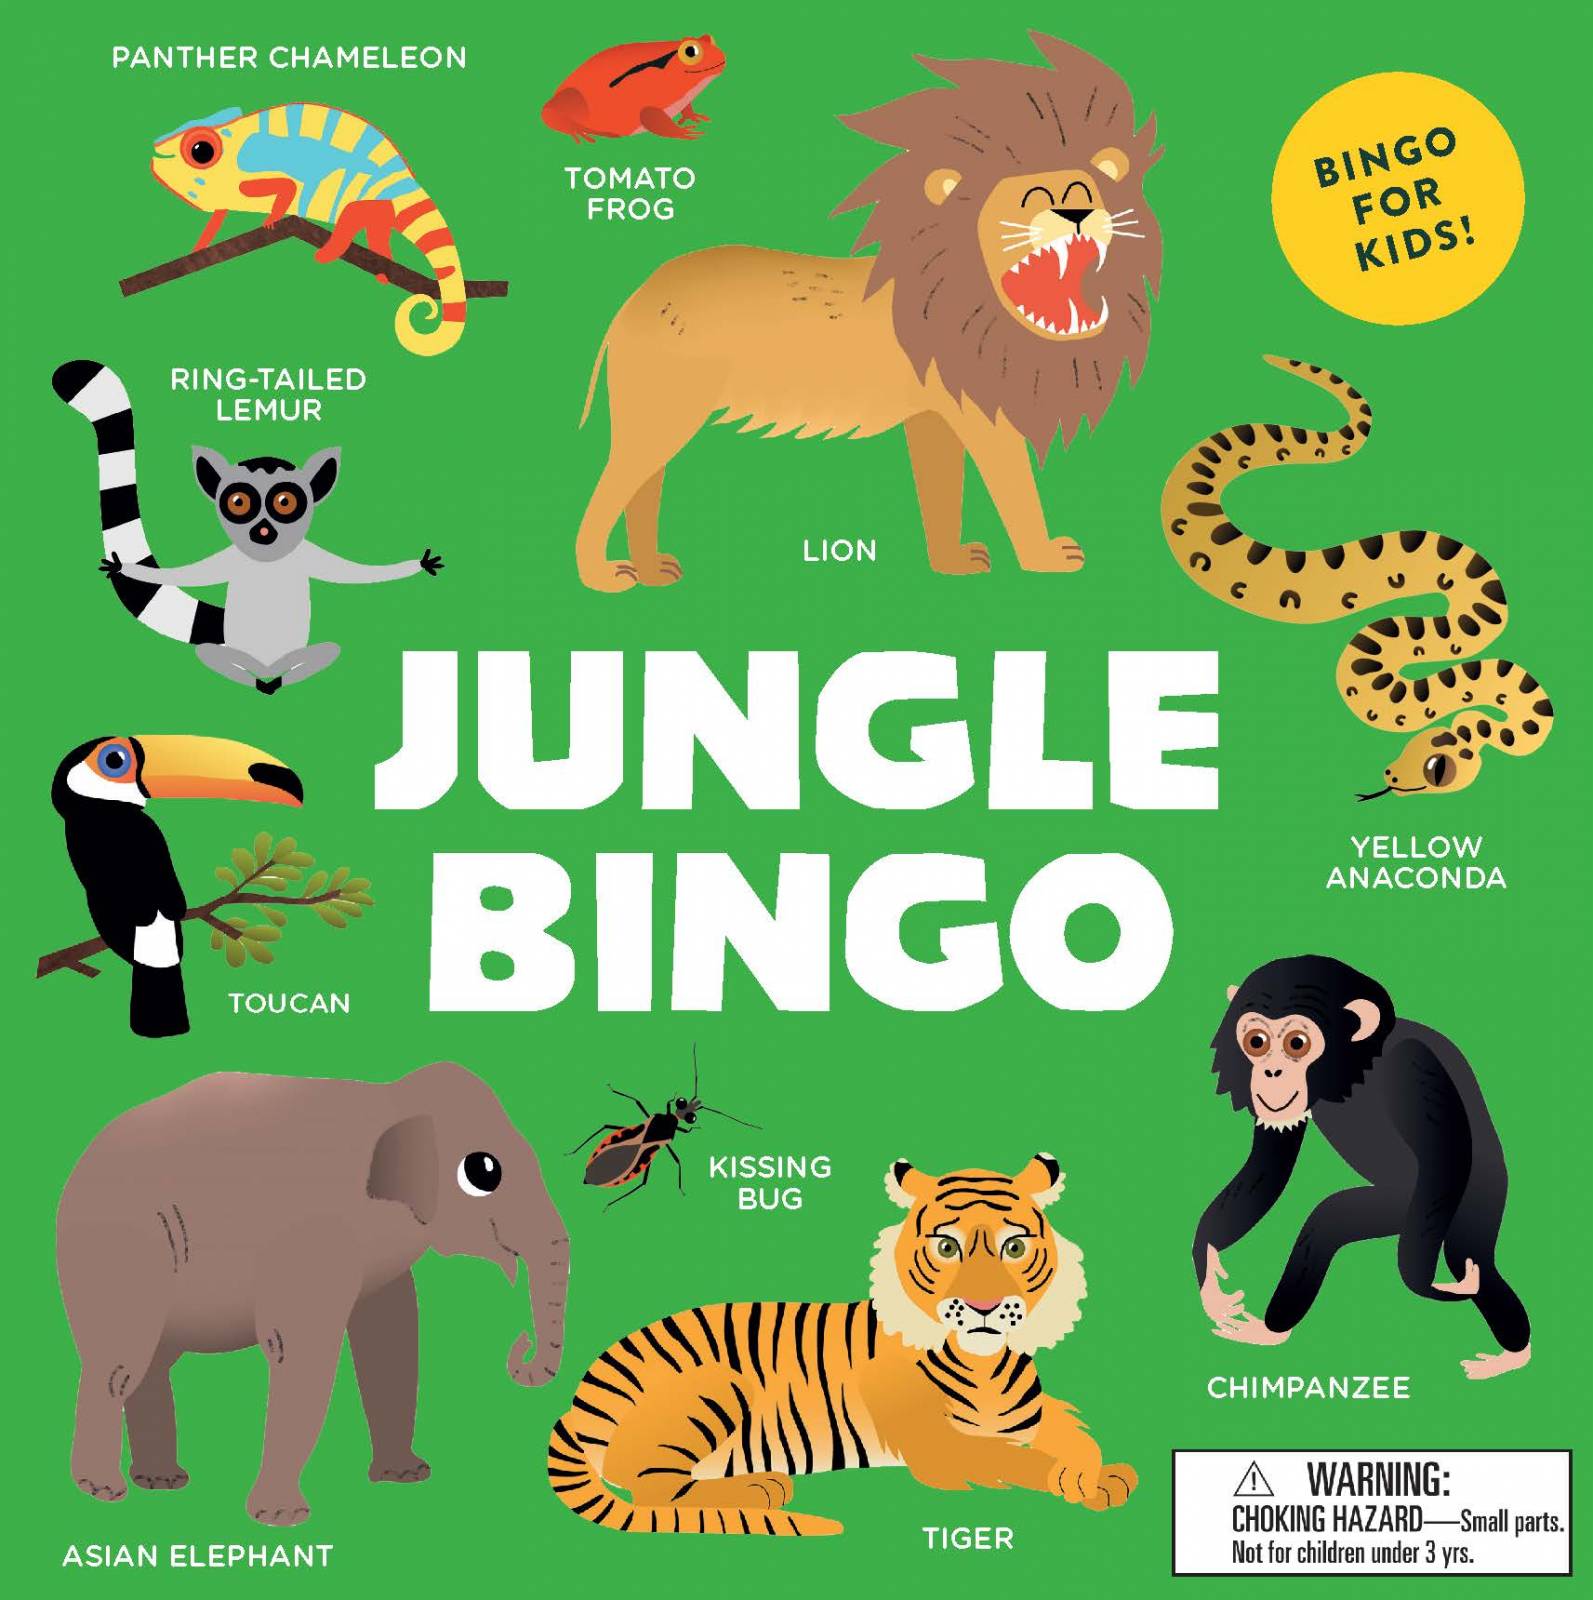 Jungle Bingo Game